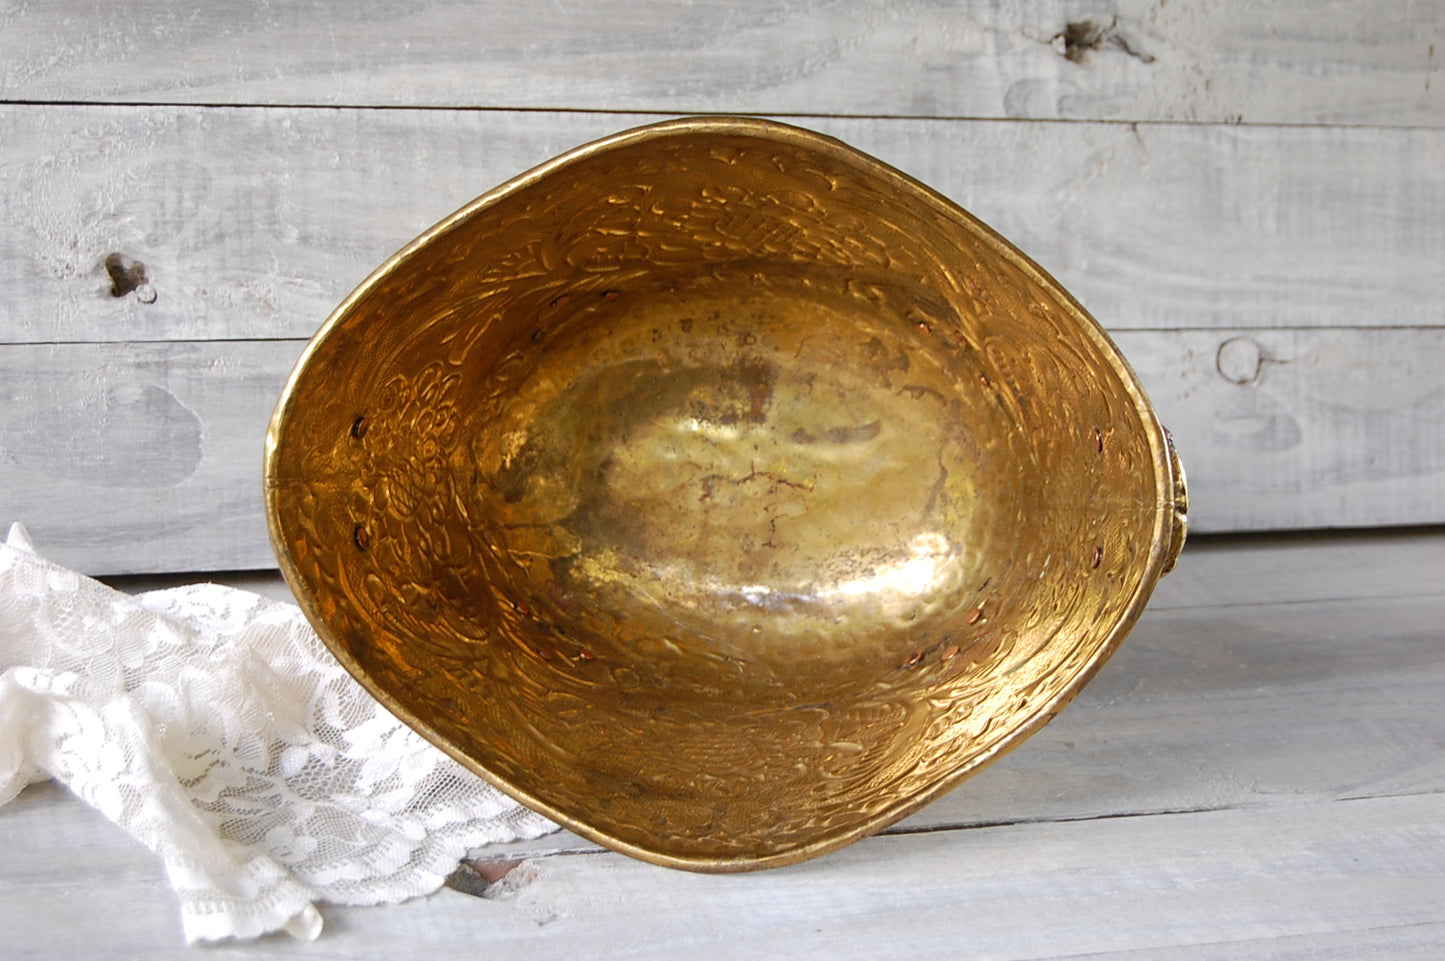 Repoussé brass bowl